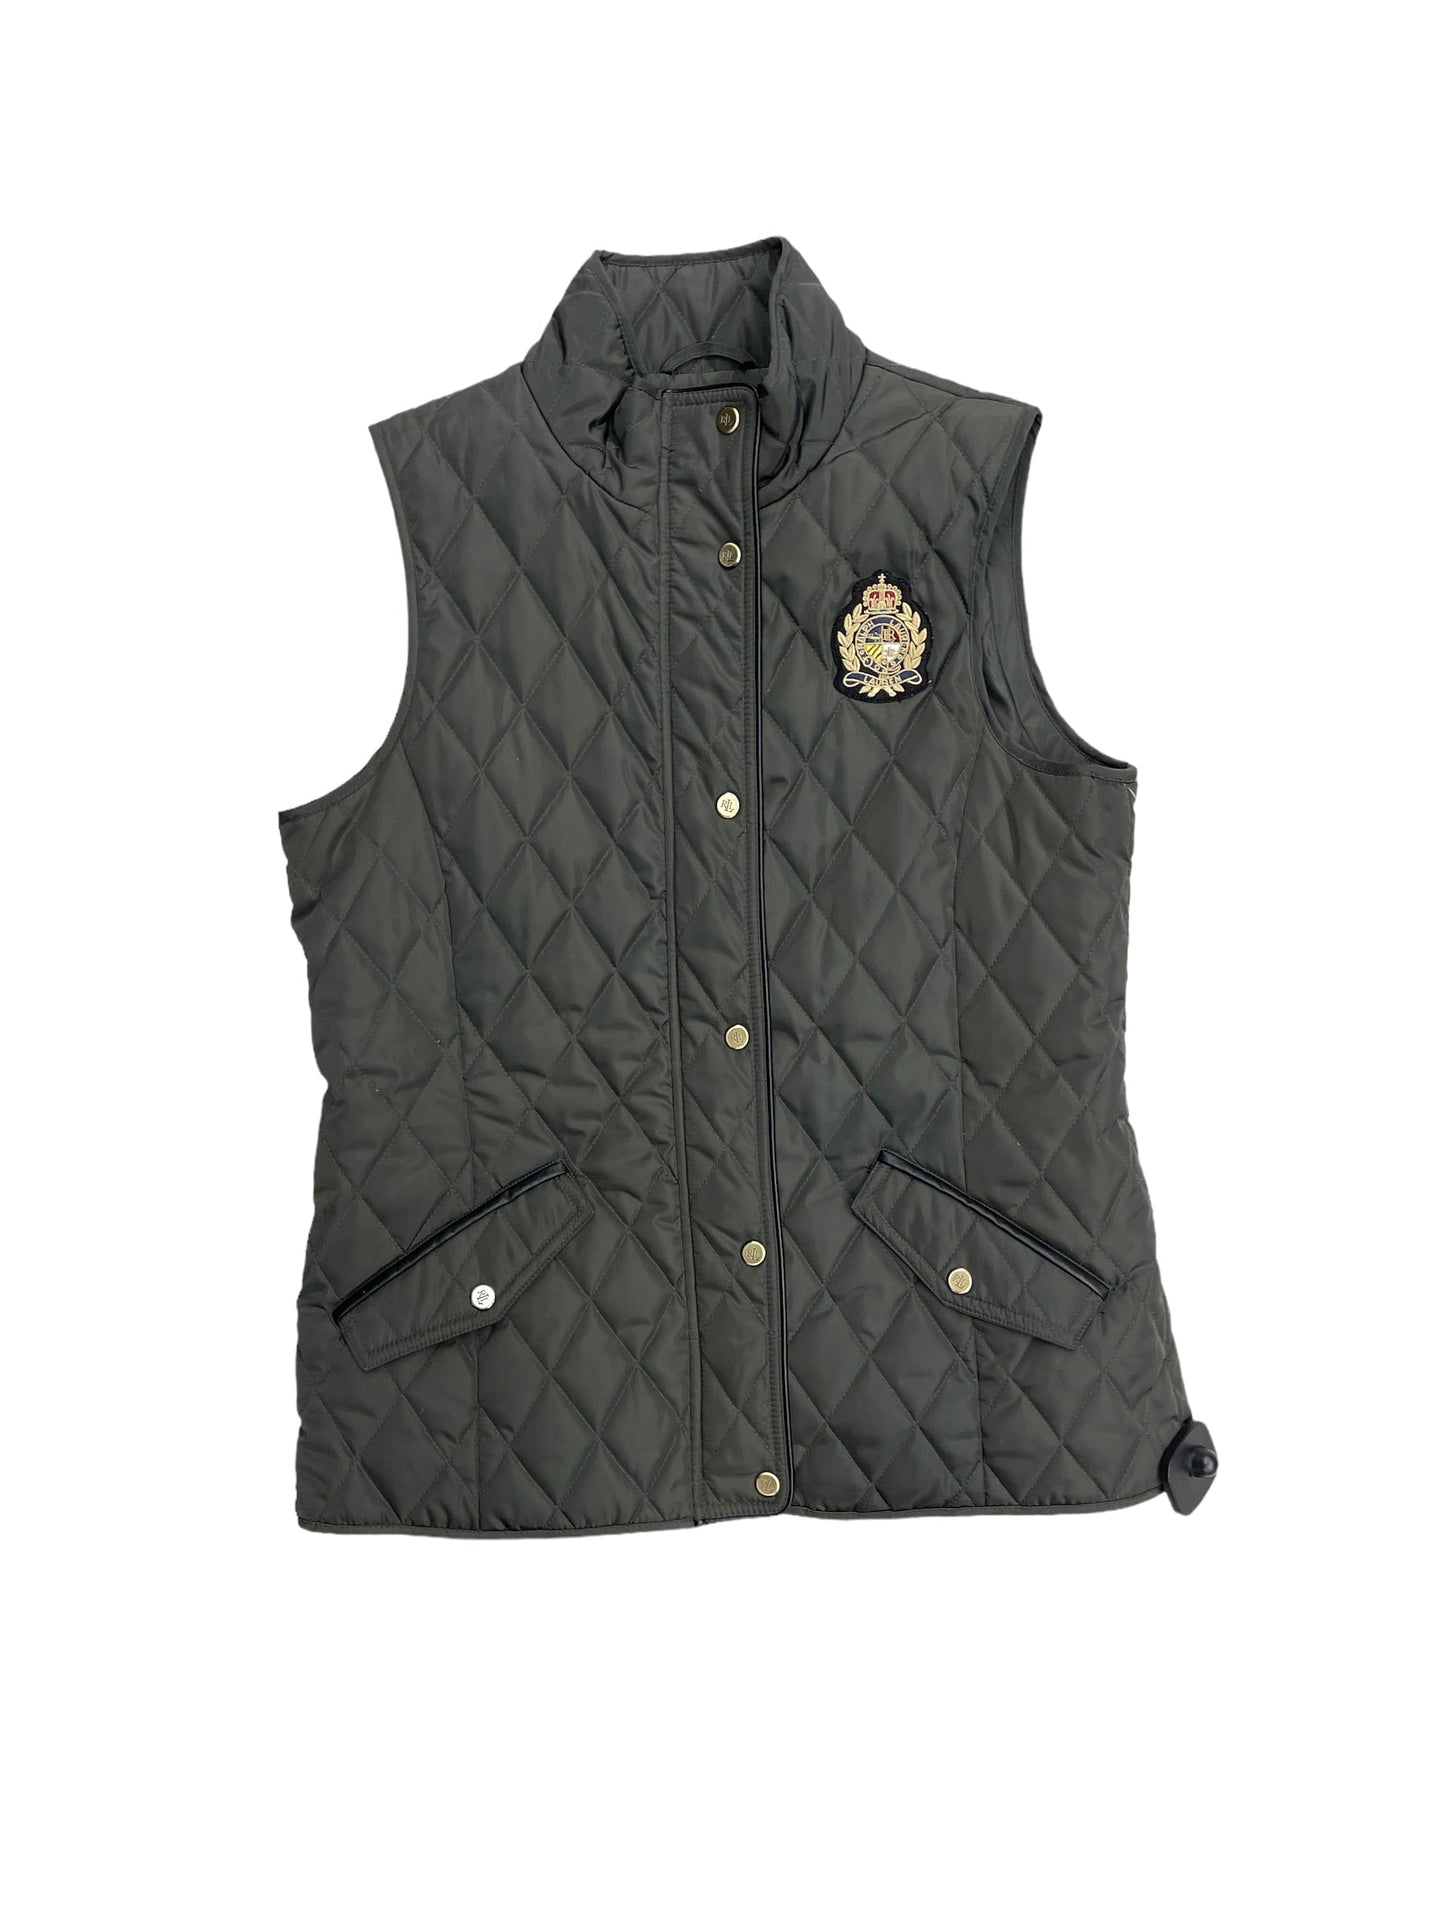 Vest Puffer & Quilted By Lauren By Ralph Lauren  Size: S